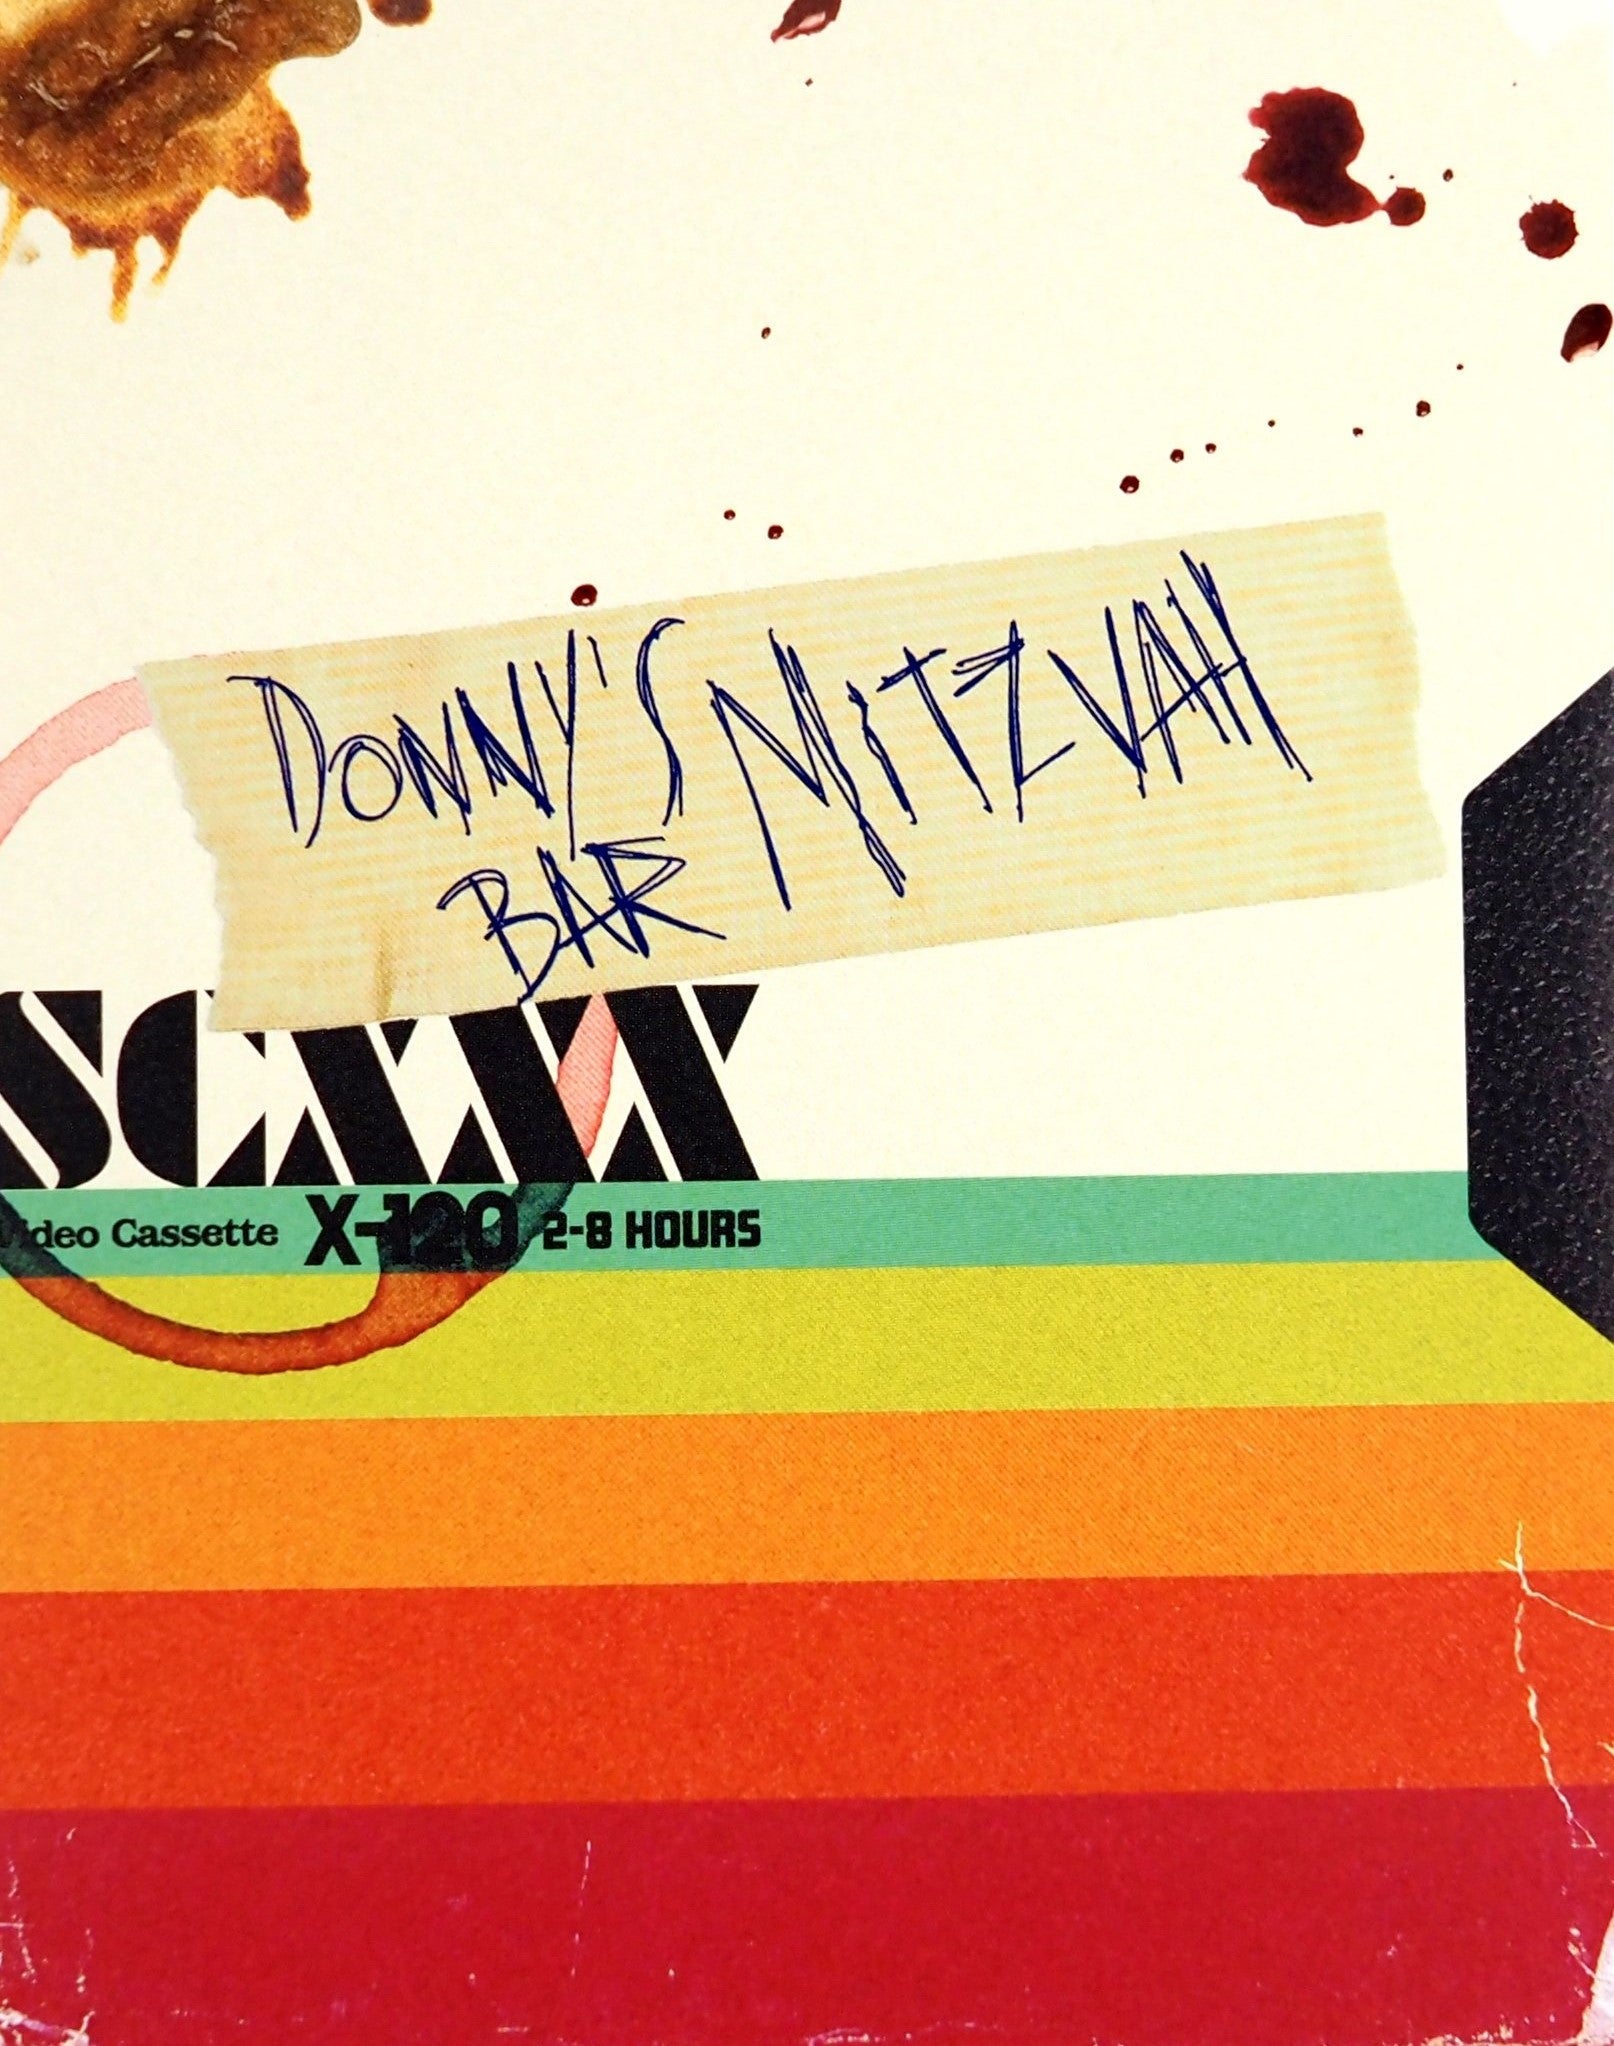 Donnys Bar Mitzvah (Limited Edition) Blu-Ray Blu-Ray